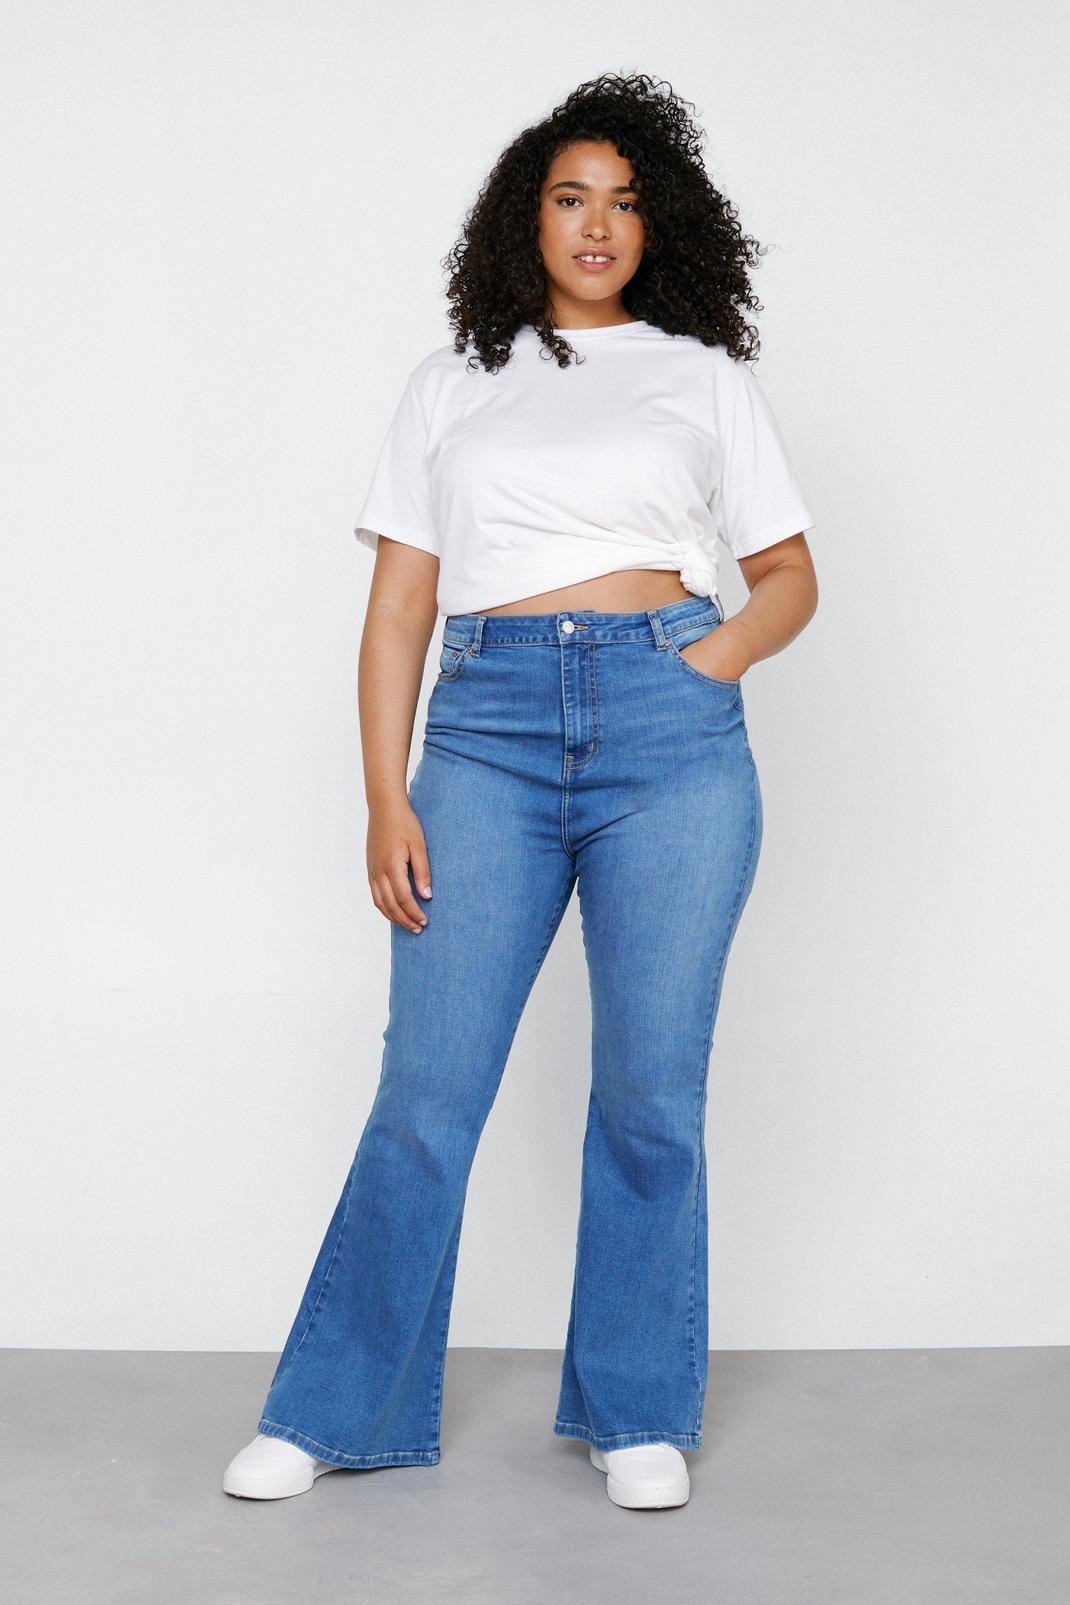 Plus Size Super Flared Jeans  Super flare jeans, Plus size outfits, Flare  jeans outfit plus size